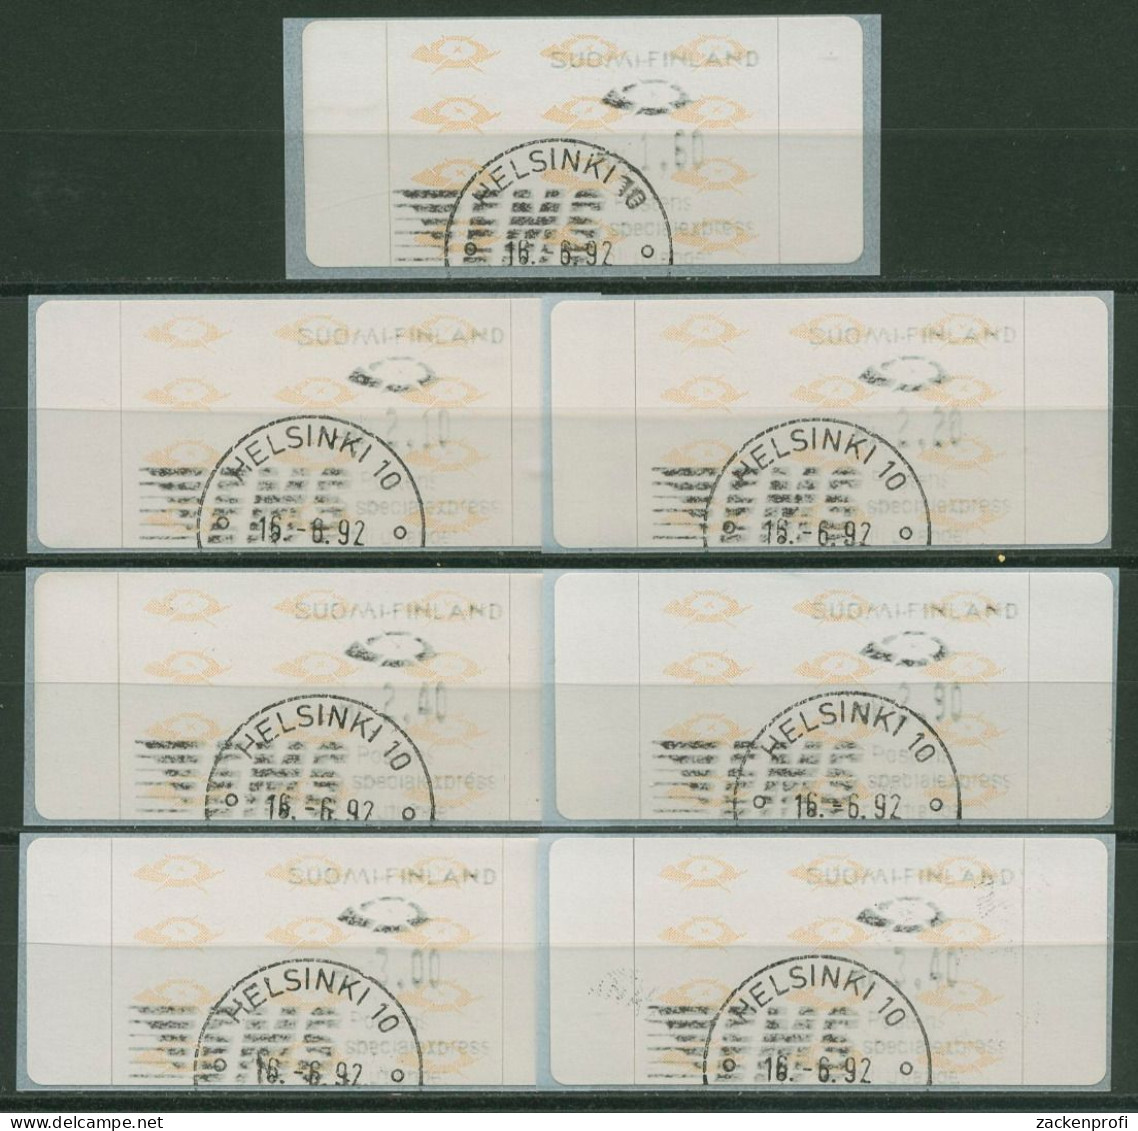 Finnland Automatenmarken 1992 Posthörner Satz 7 Werte ATM 12.2 S 1 Gestempelt - Vignette [ATM]